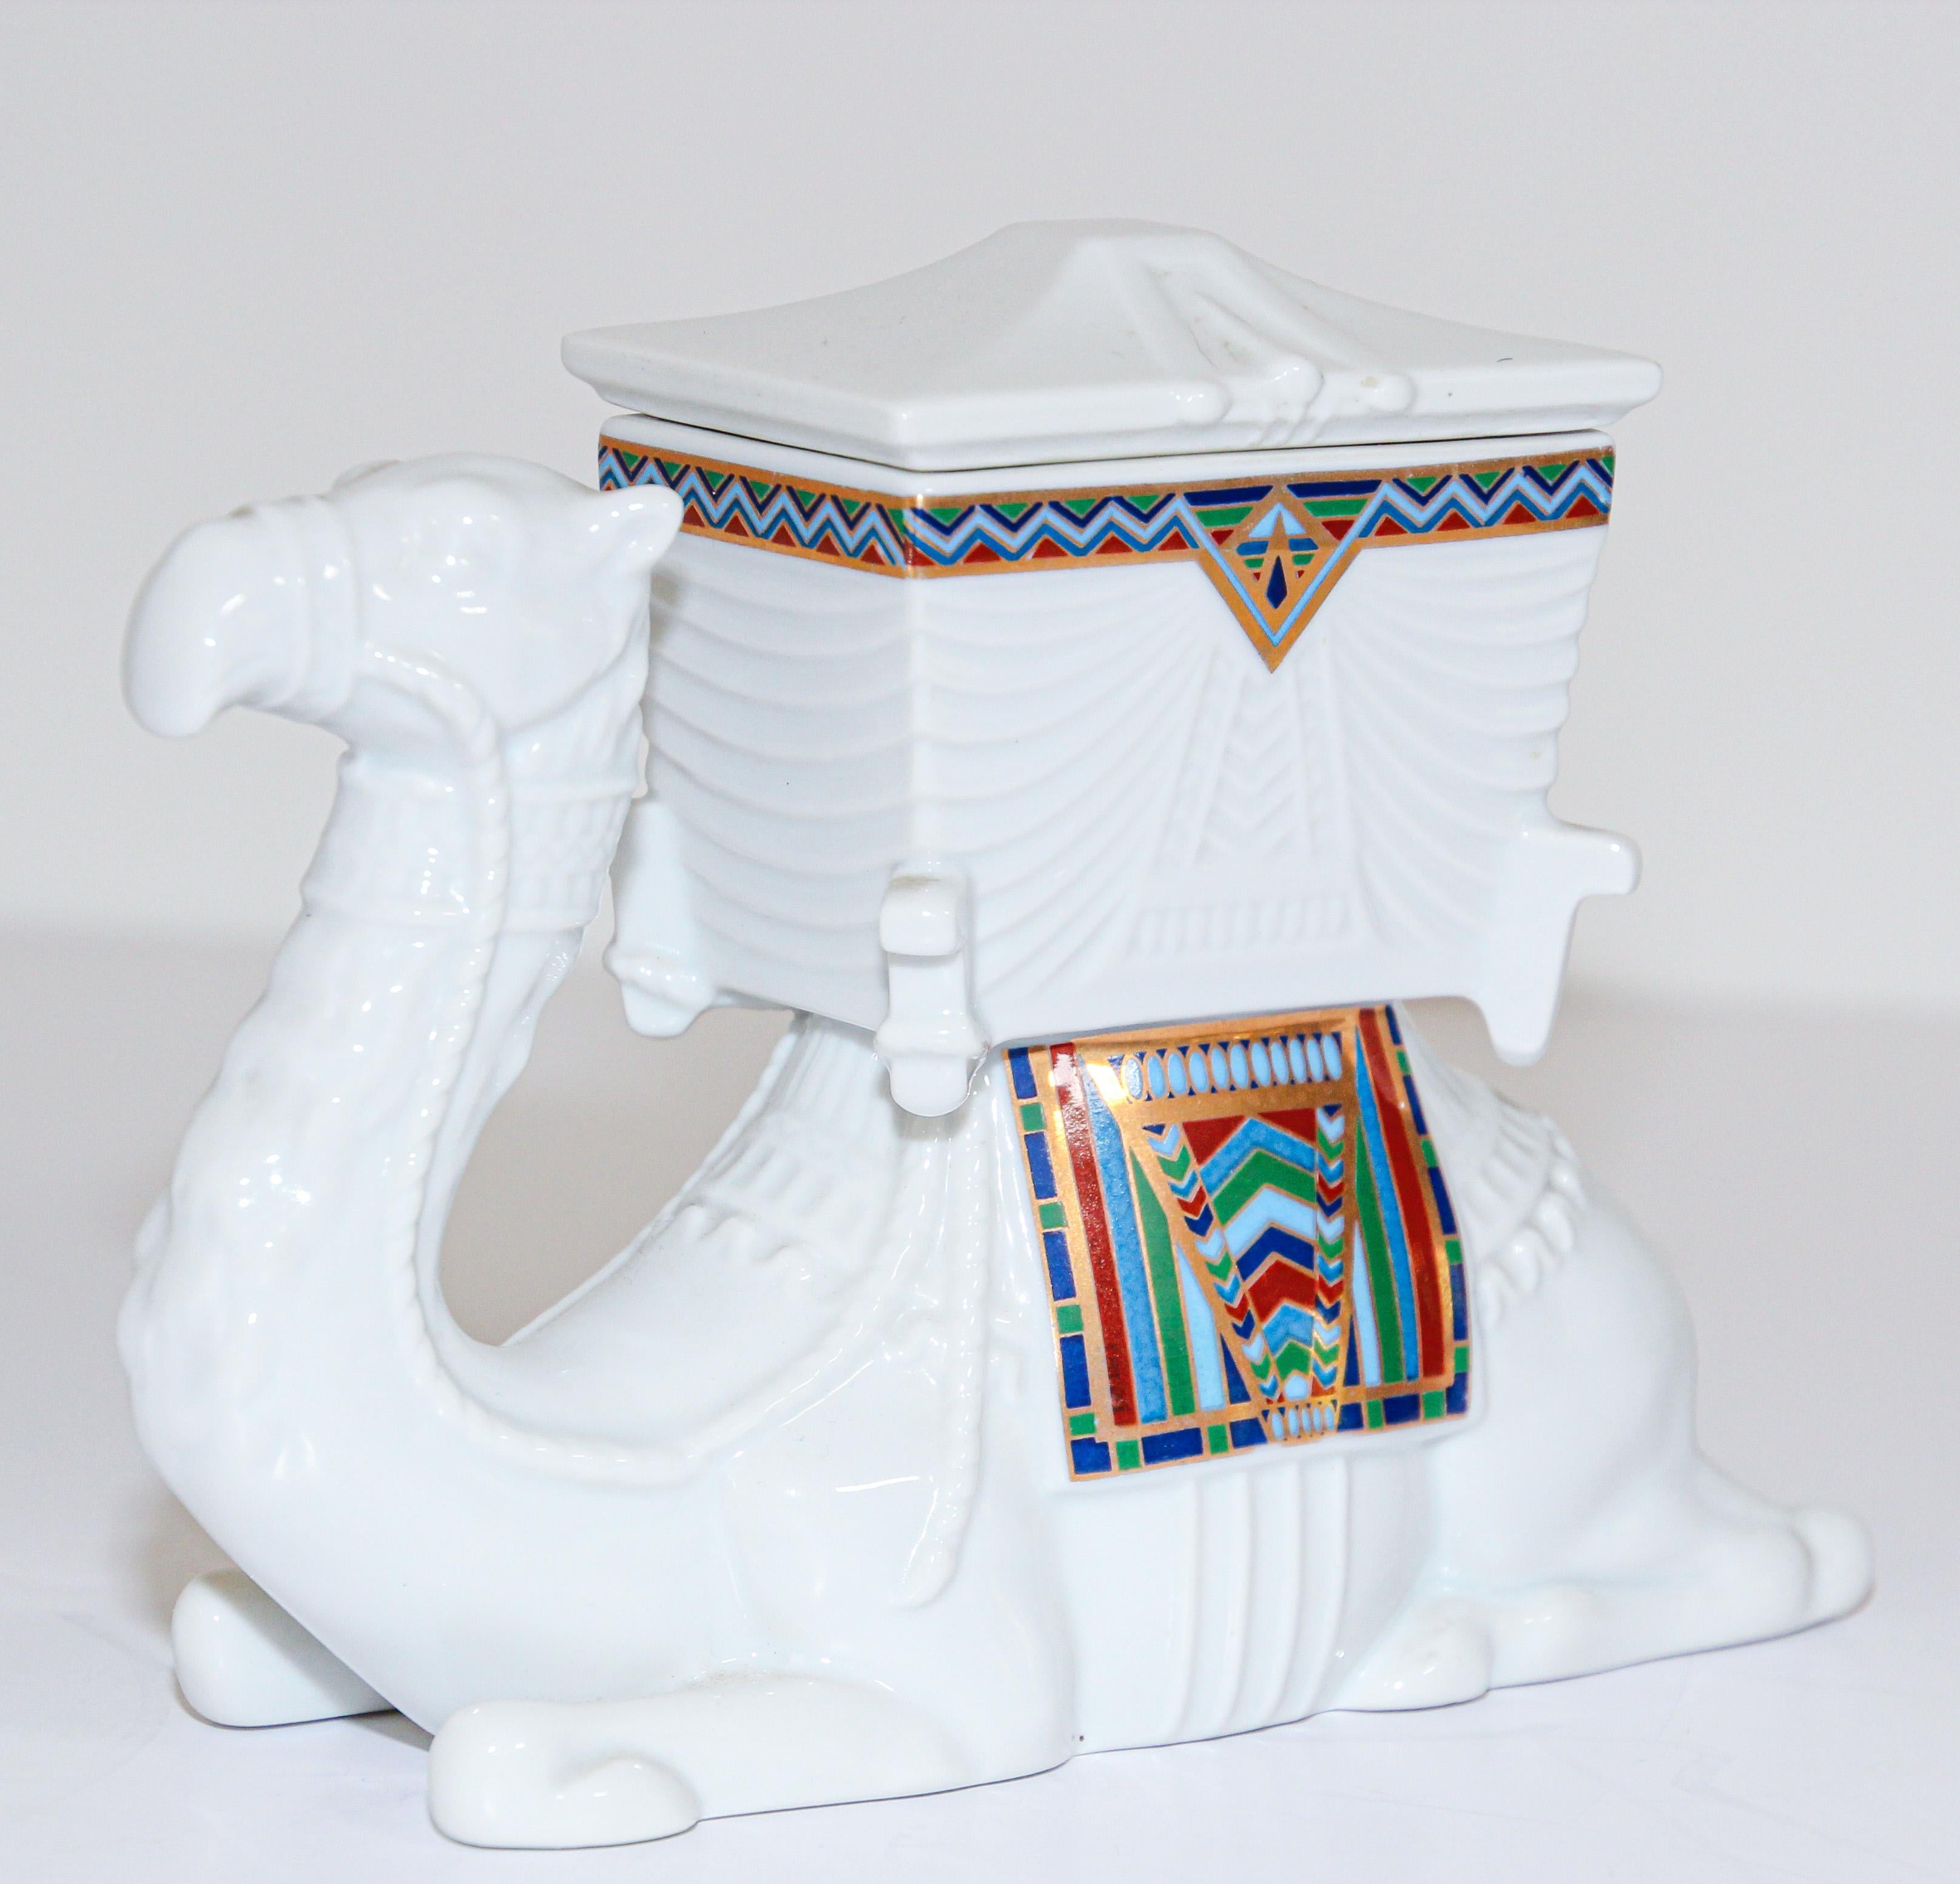 Islamic Treasures of the Pharaohs Porcelain Royal Camel by Elizabeth Arden